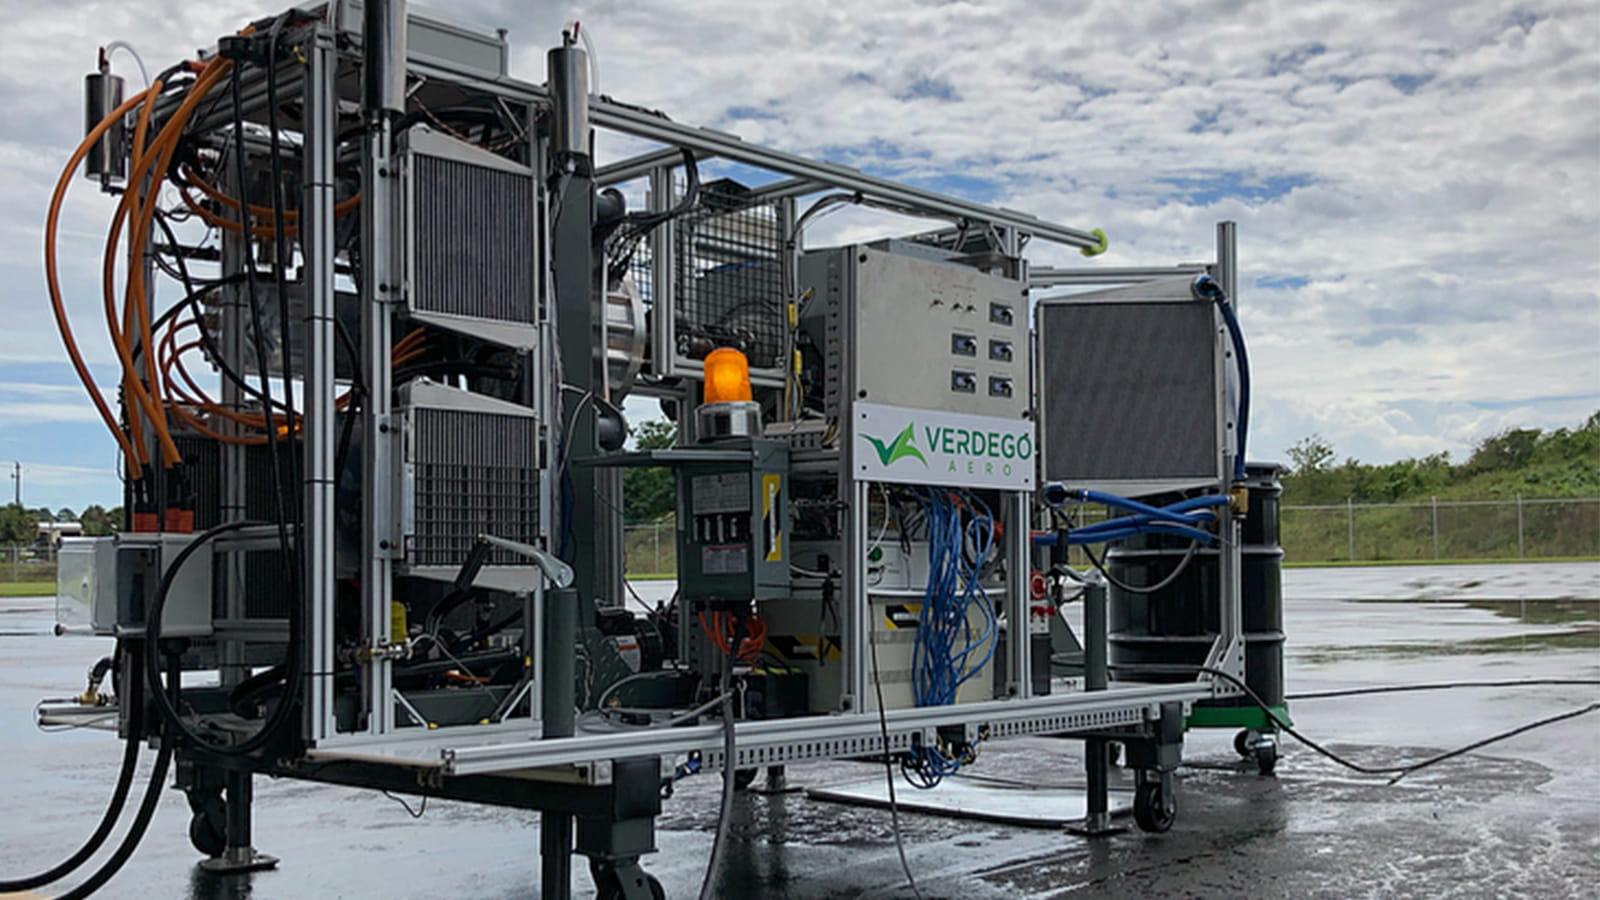 VerdeGo Aero’s VH-1-150 hybrid powerplant during ground-based engineering research